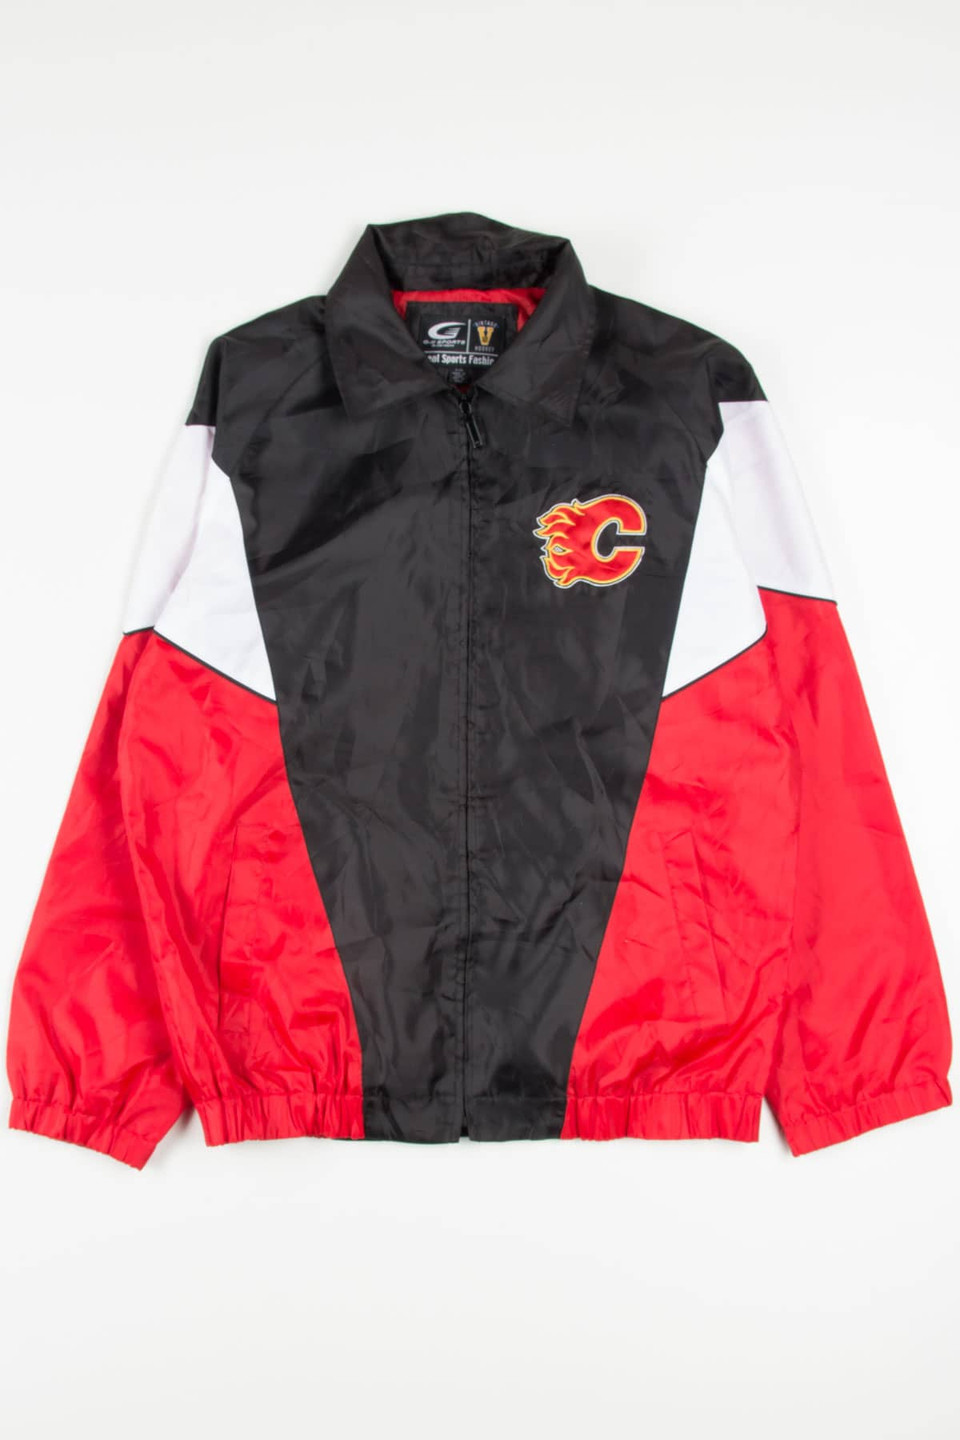 Vintage Calgary Flames Jacket - Ragstock.com